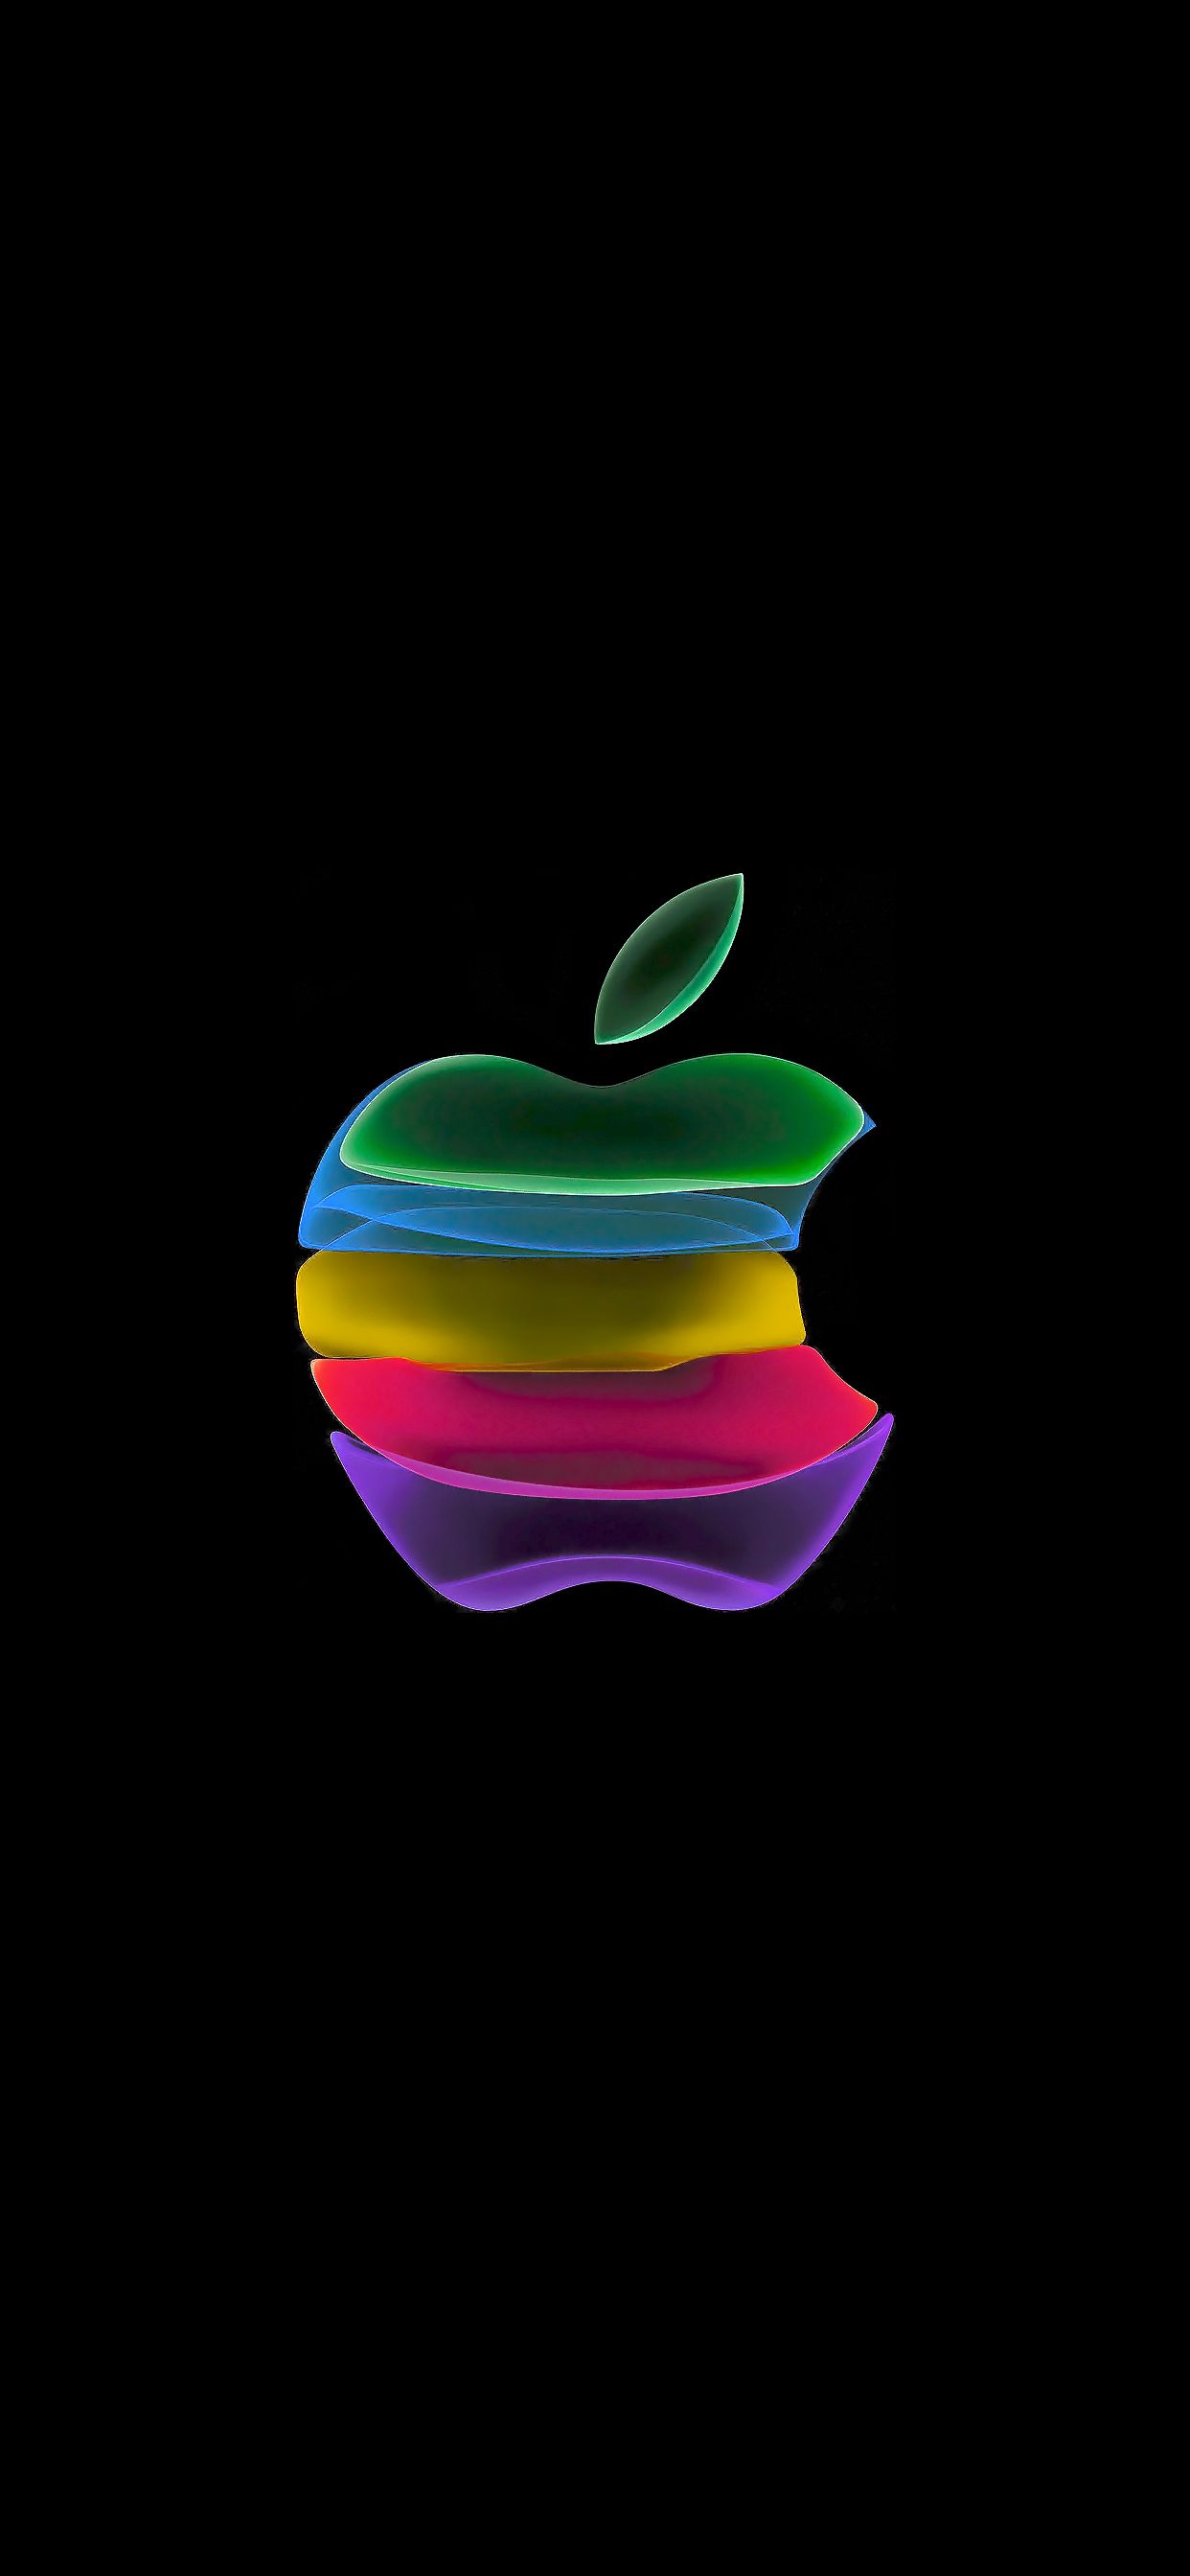 apple iphone wallpaper,graphics,still life photography,logo